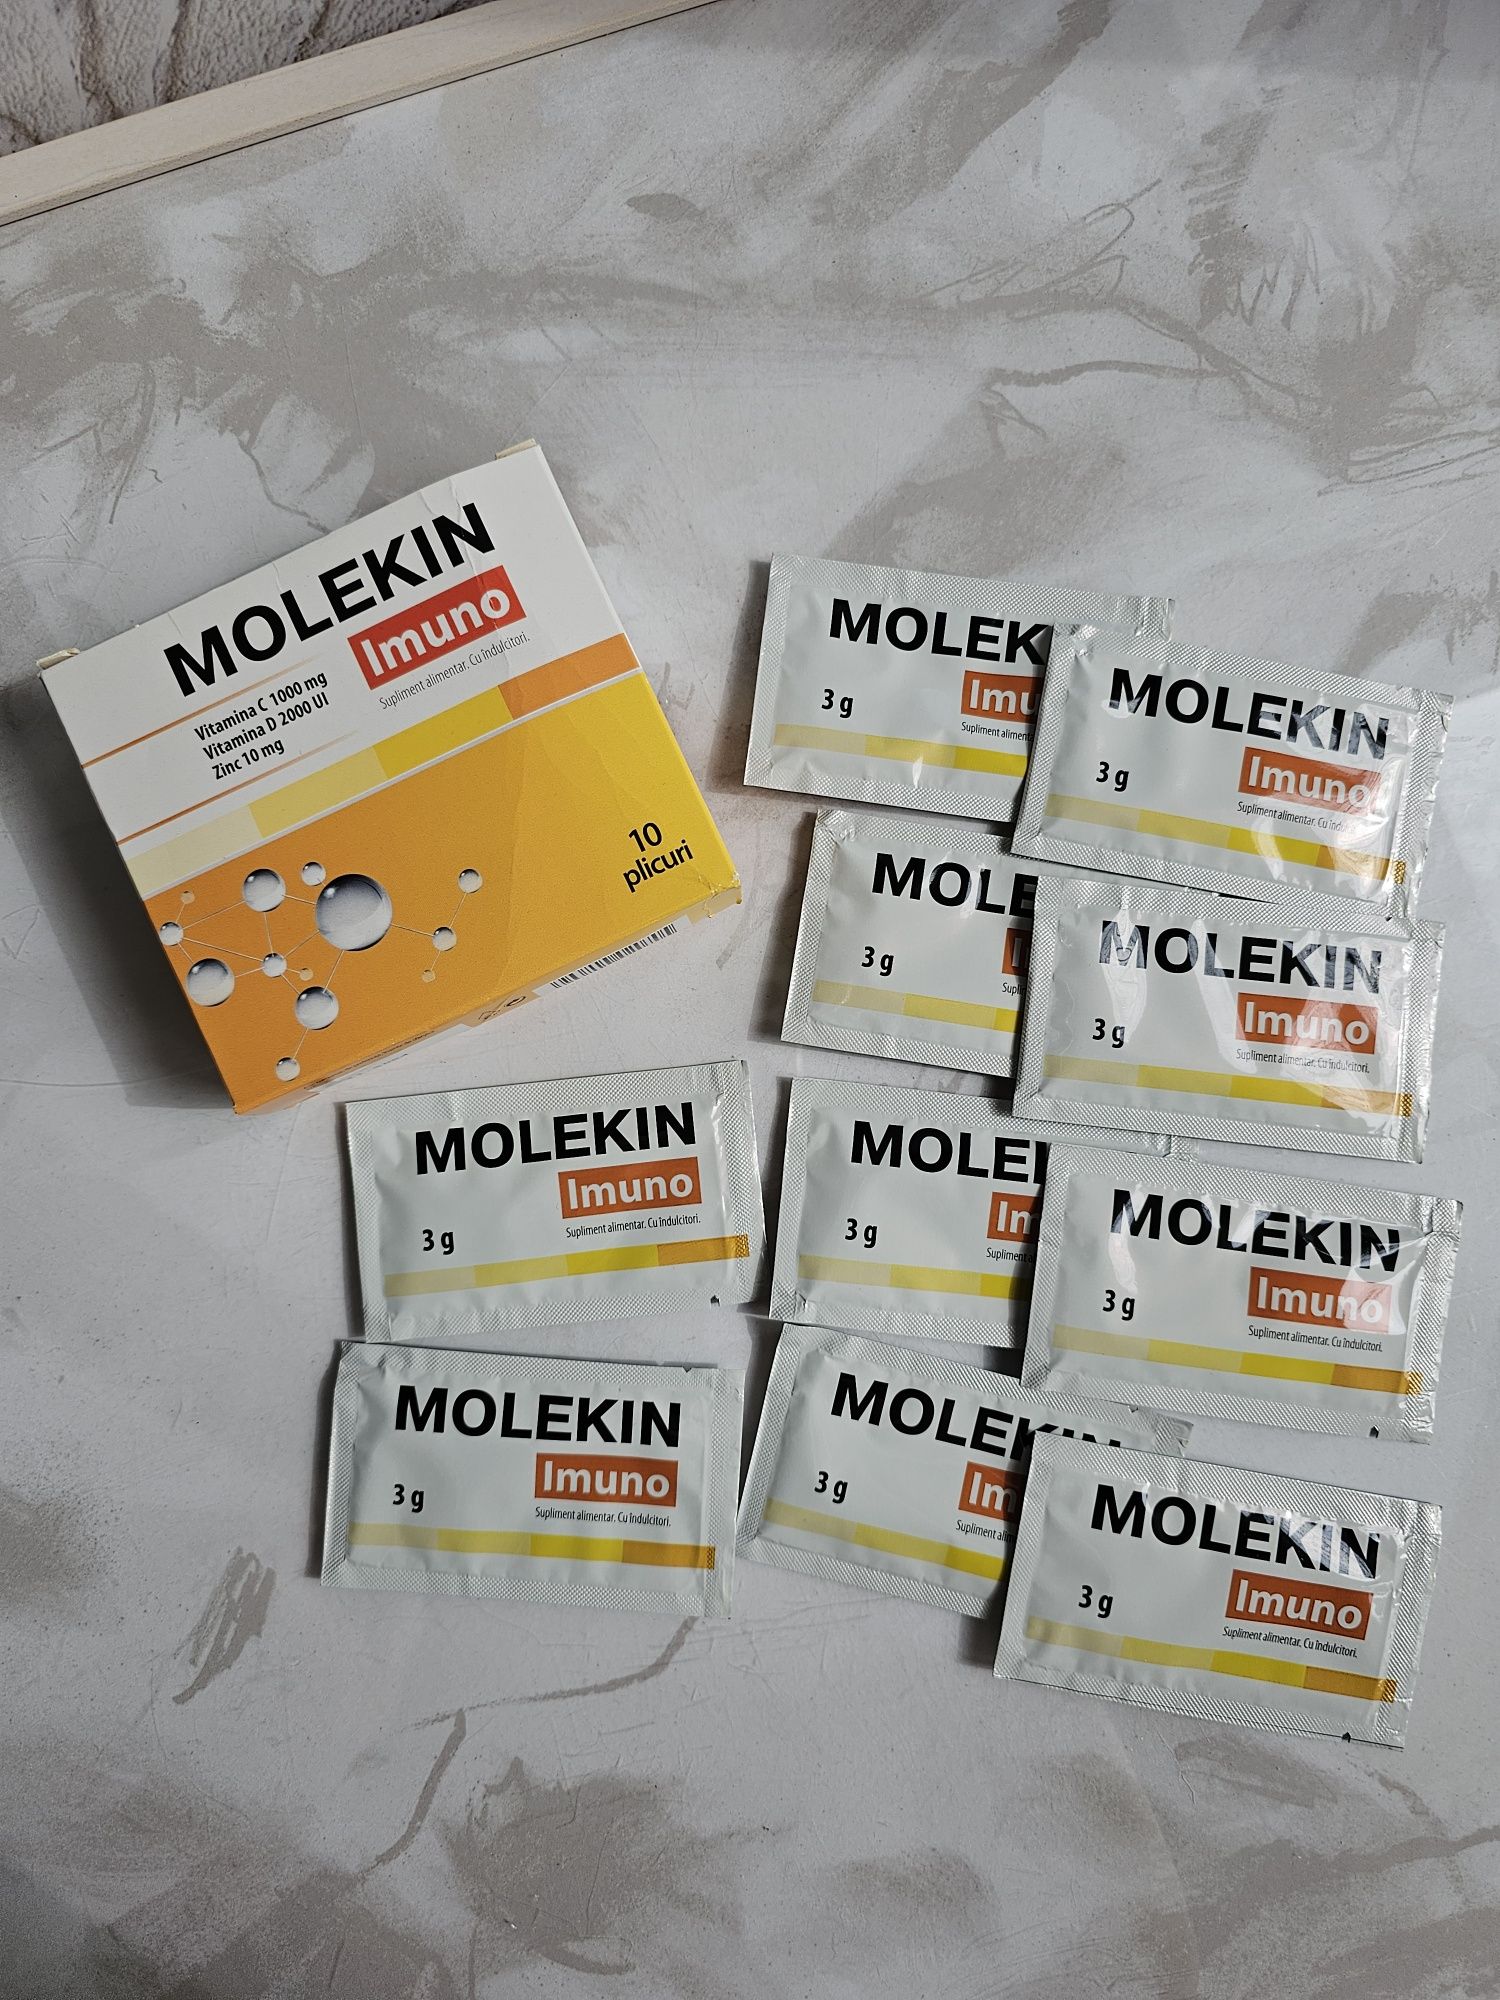 Molekin Imuno plicuri 10 doze - Nou sigilat